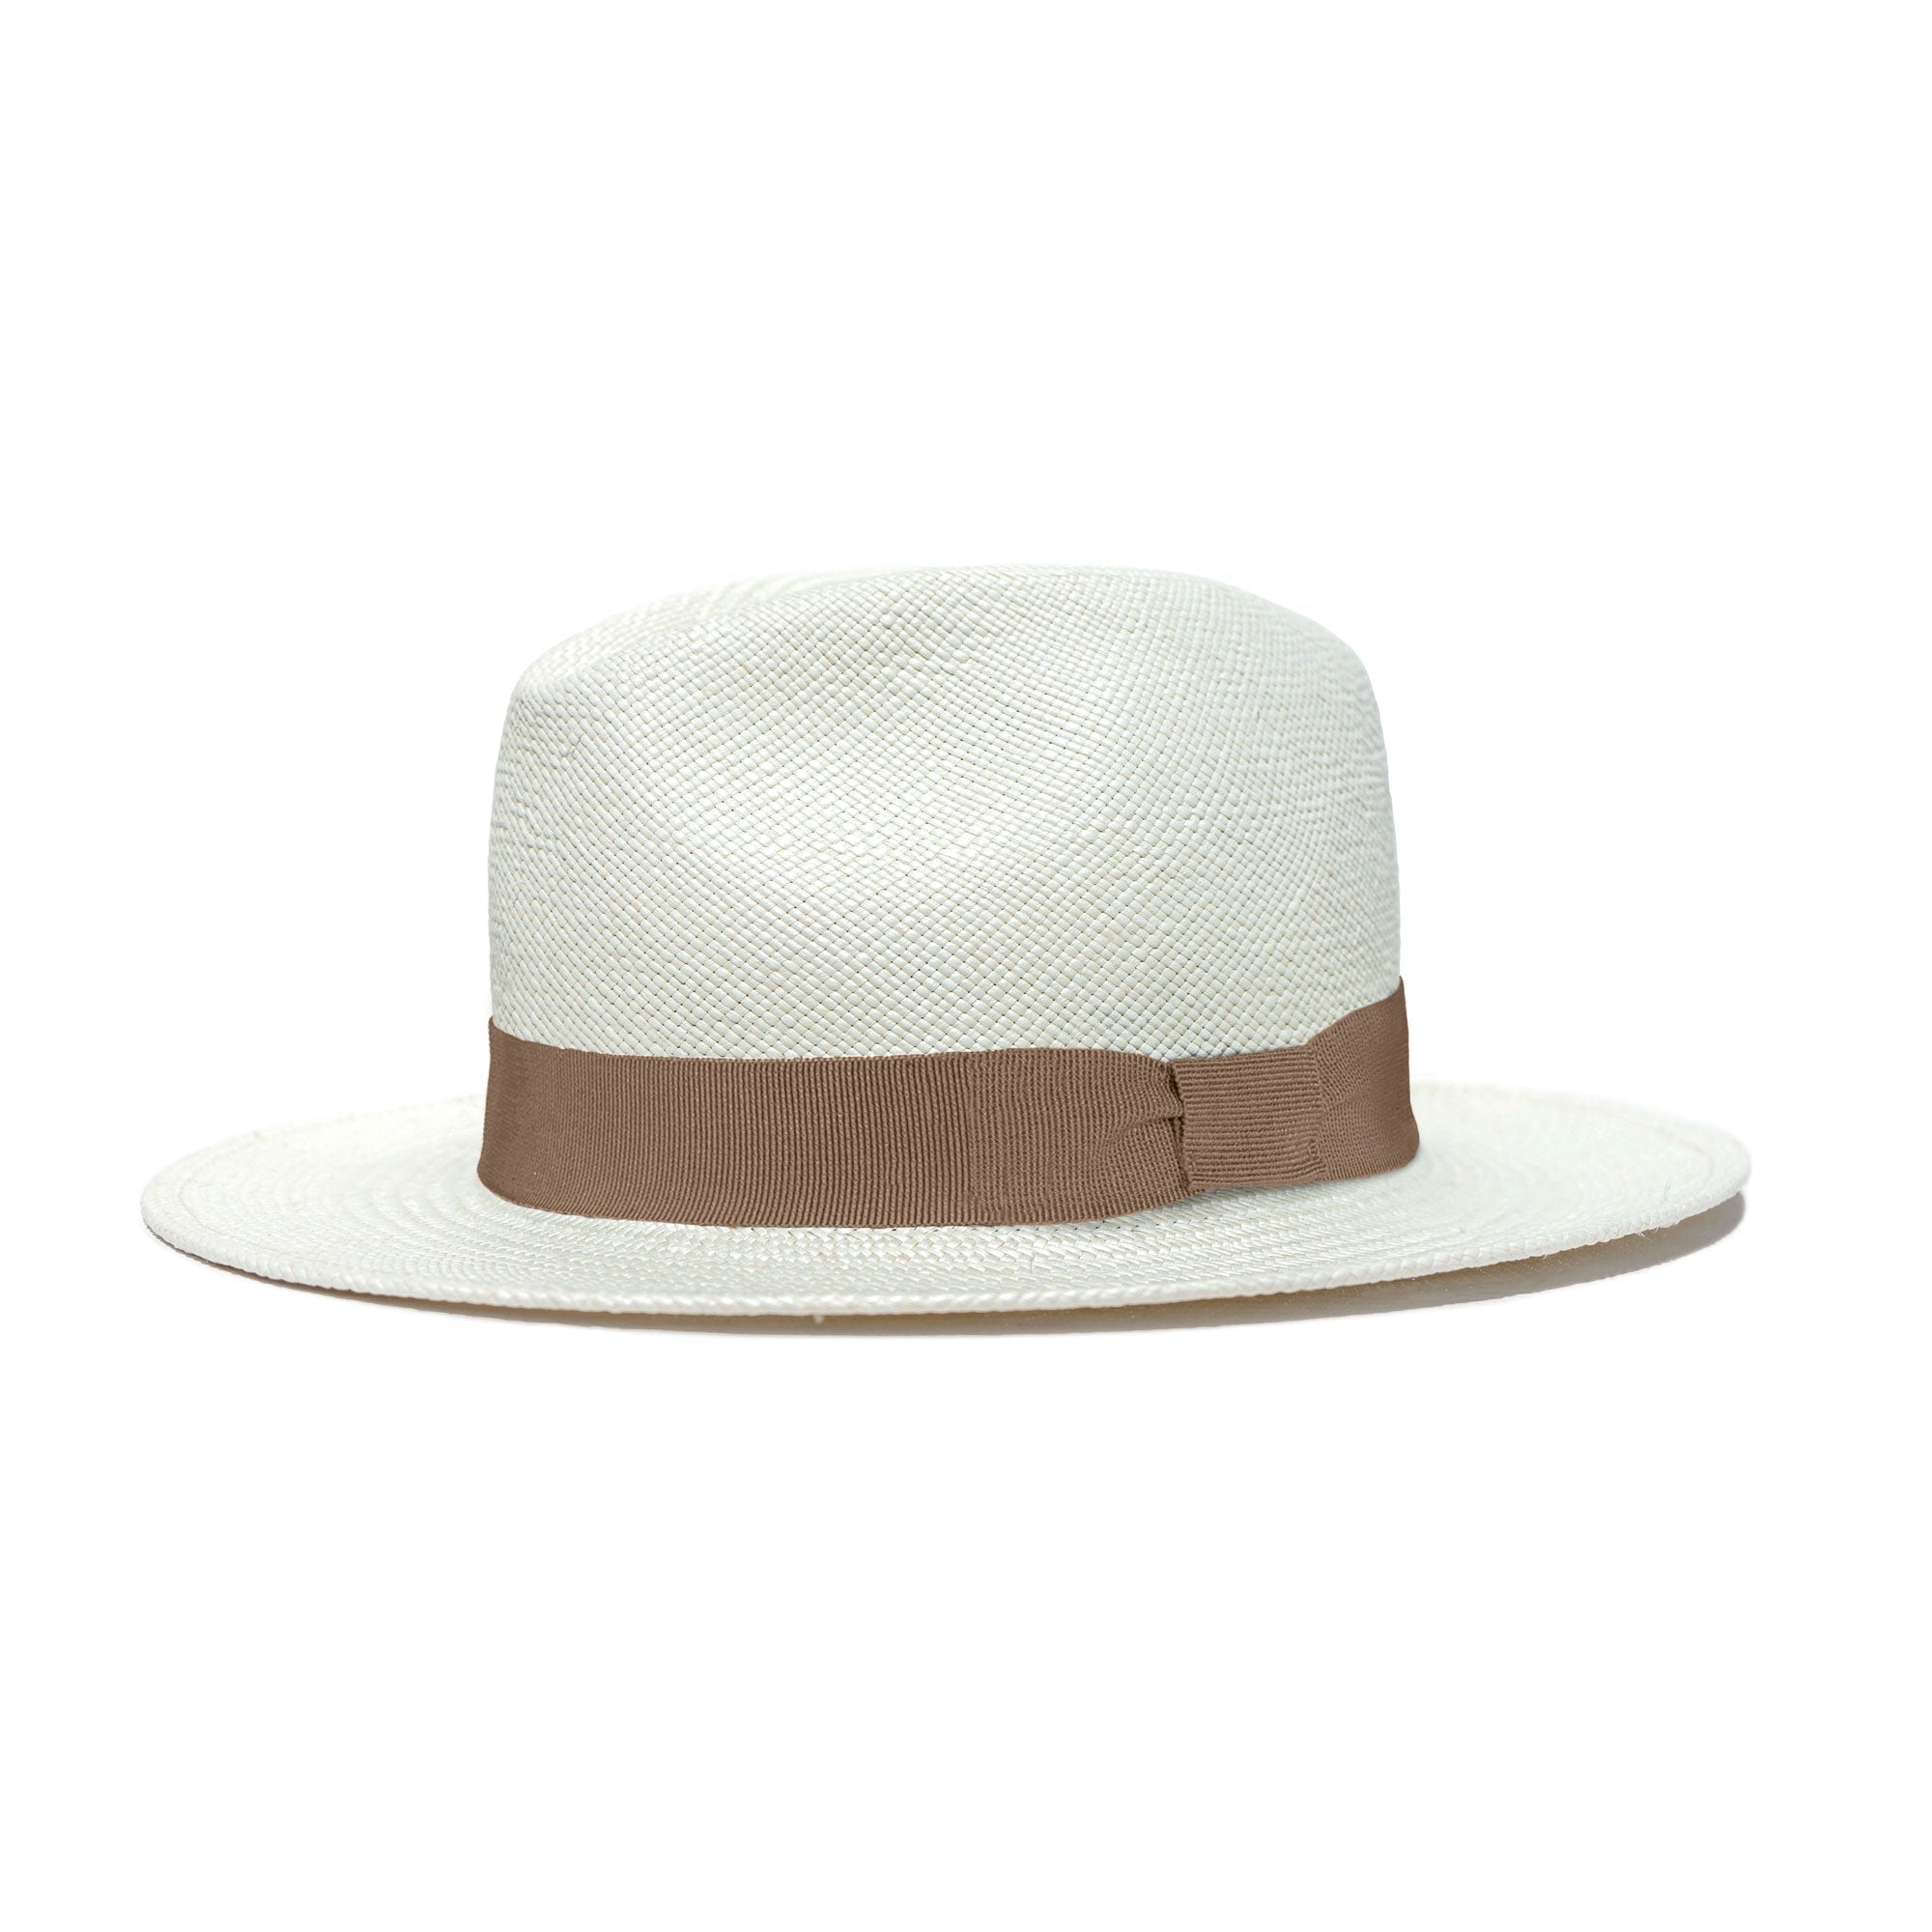 Lastelier Panama Hat